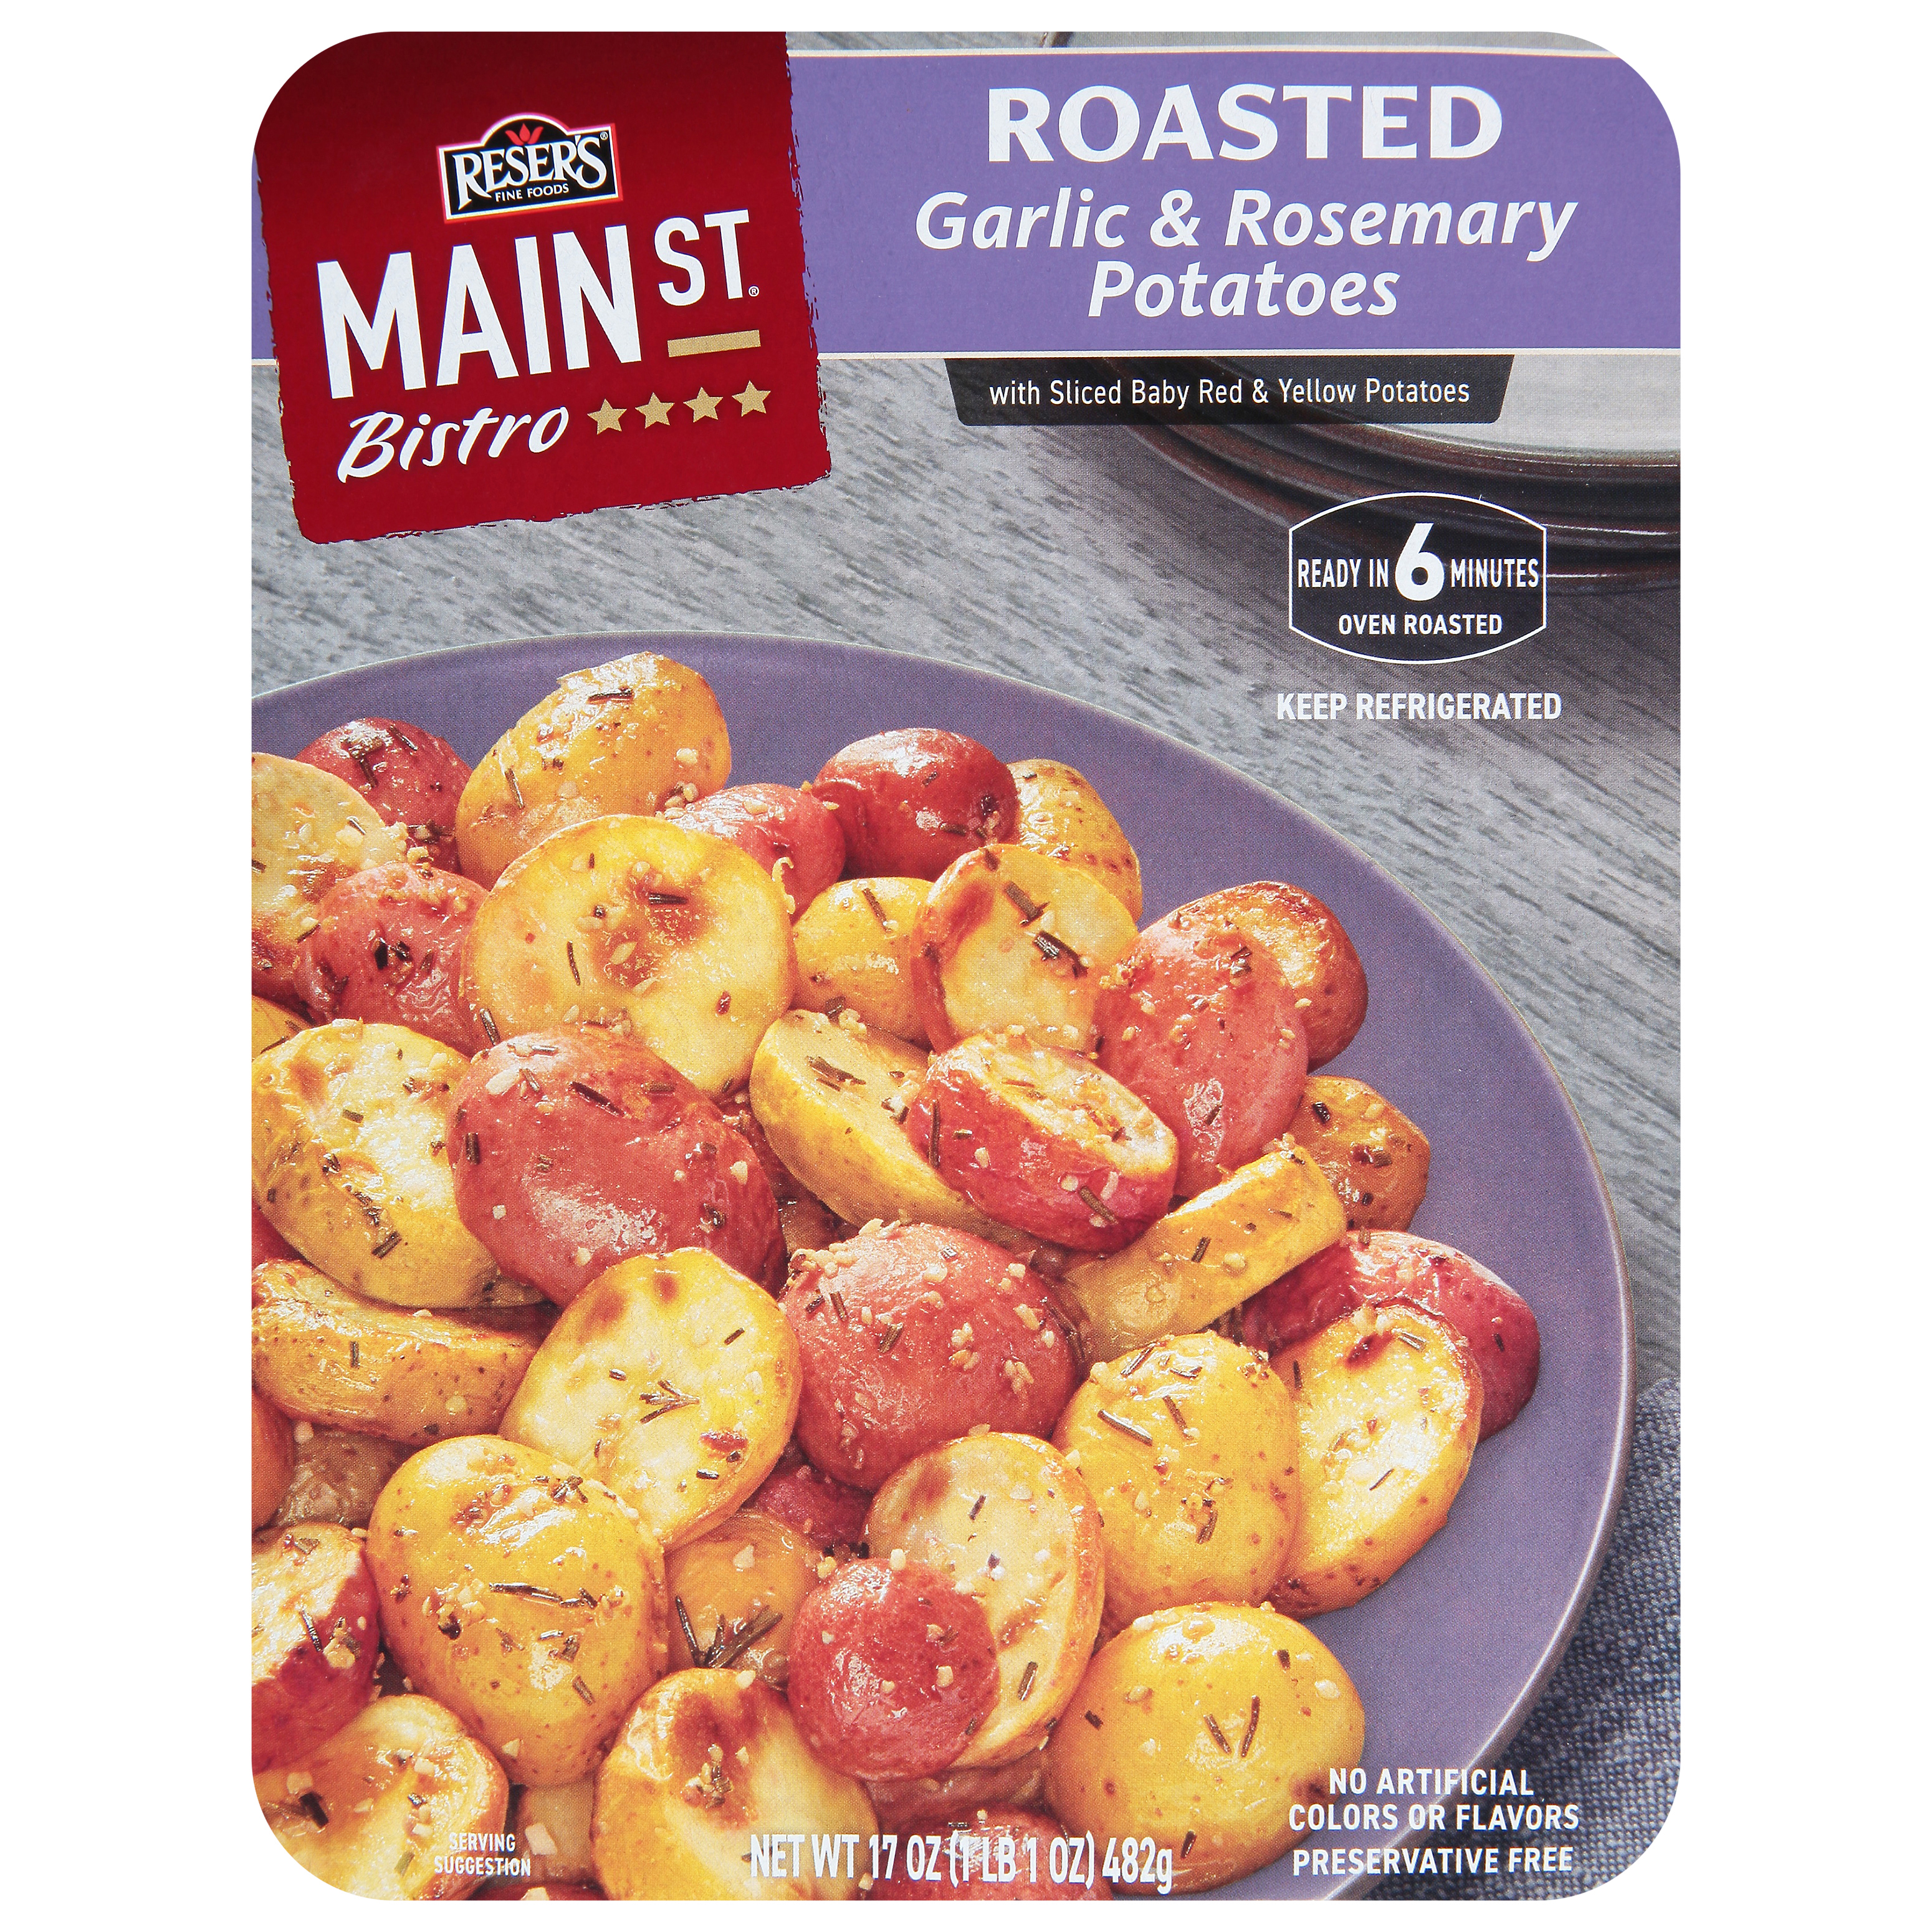 Bob Evans Gluten-Free Original Mashed Potatoes Family Size, 32 oz Tray  (Refrigerated) 